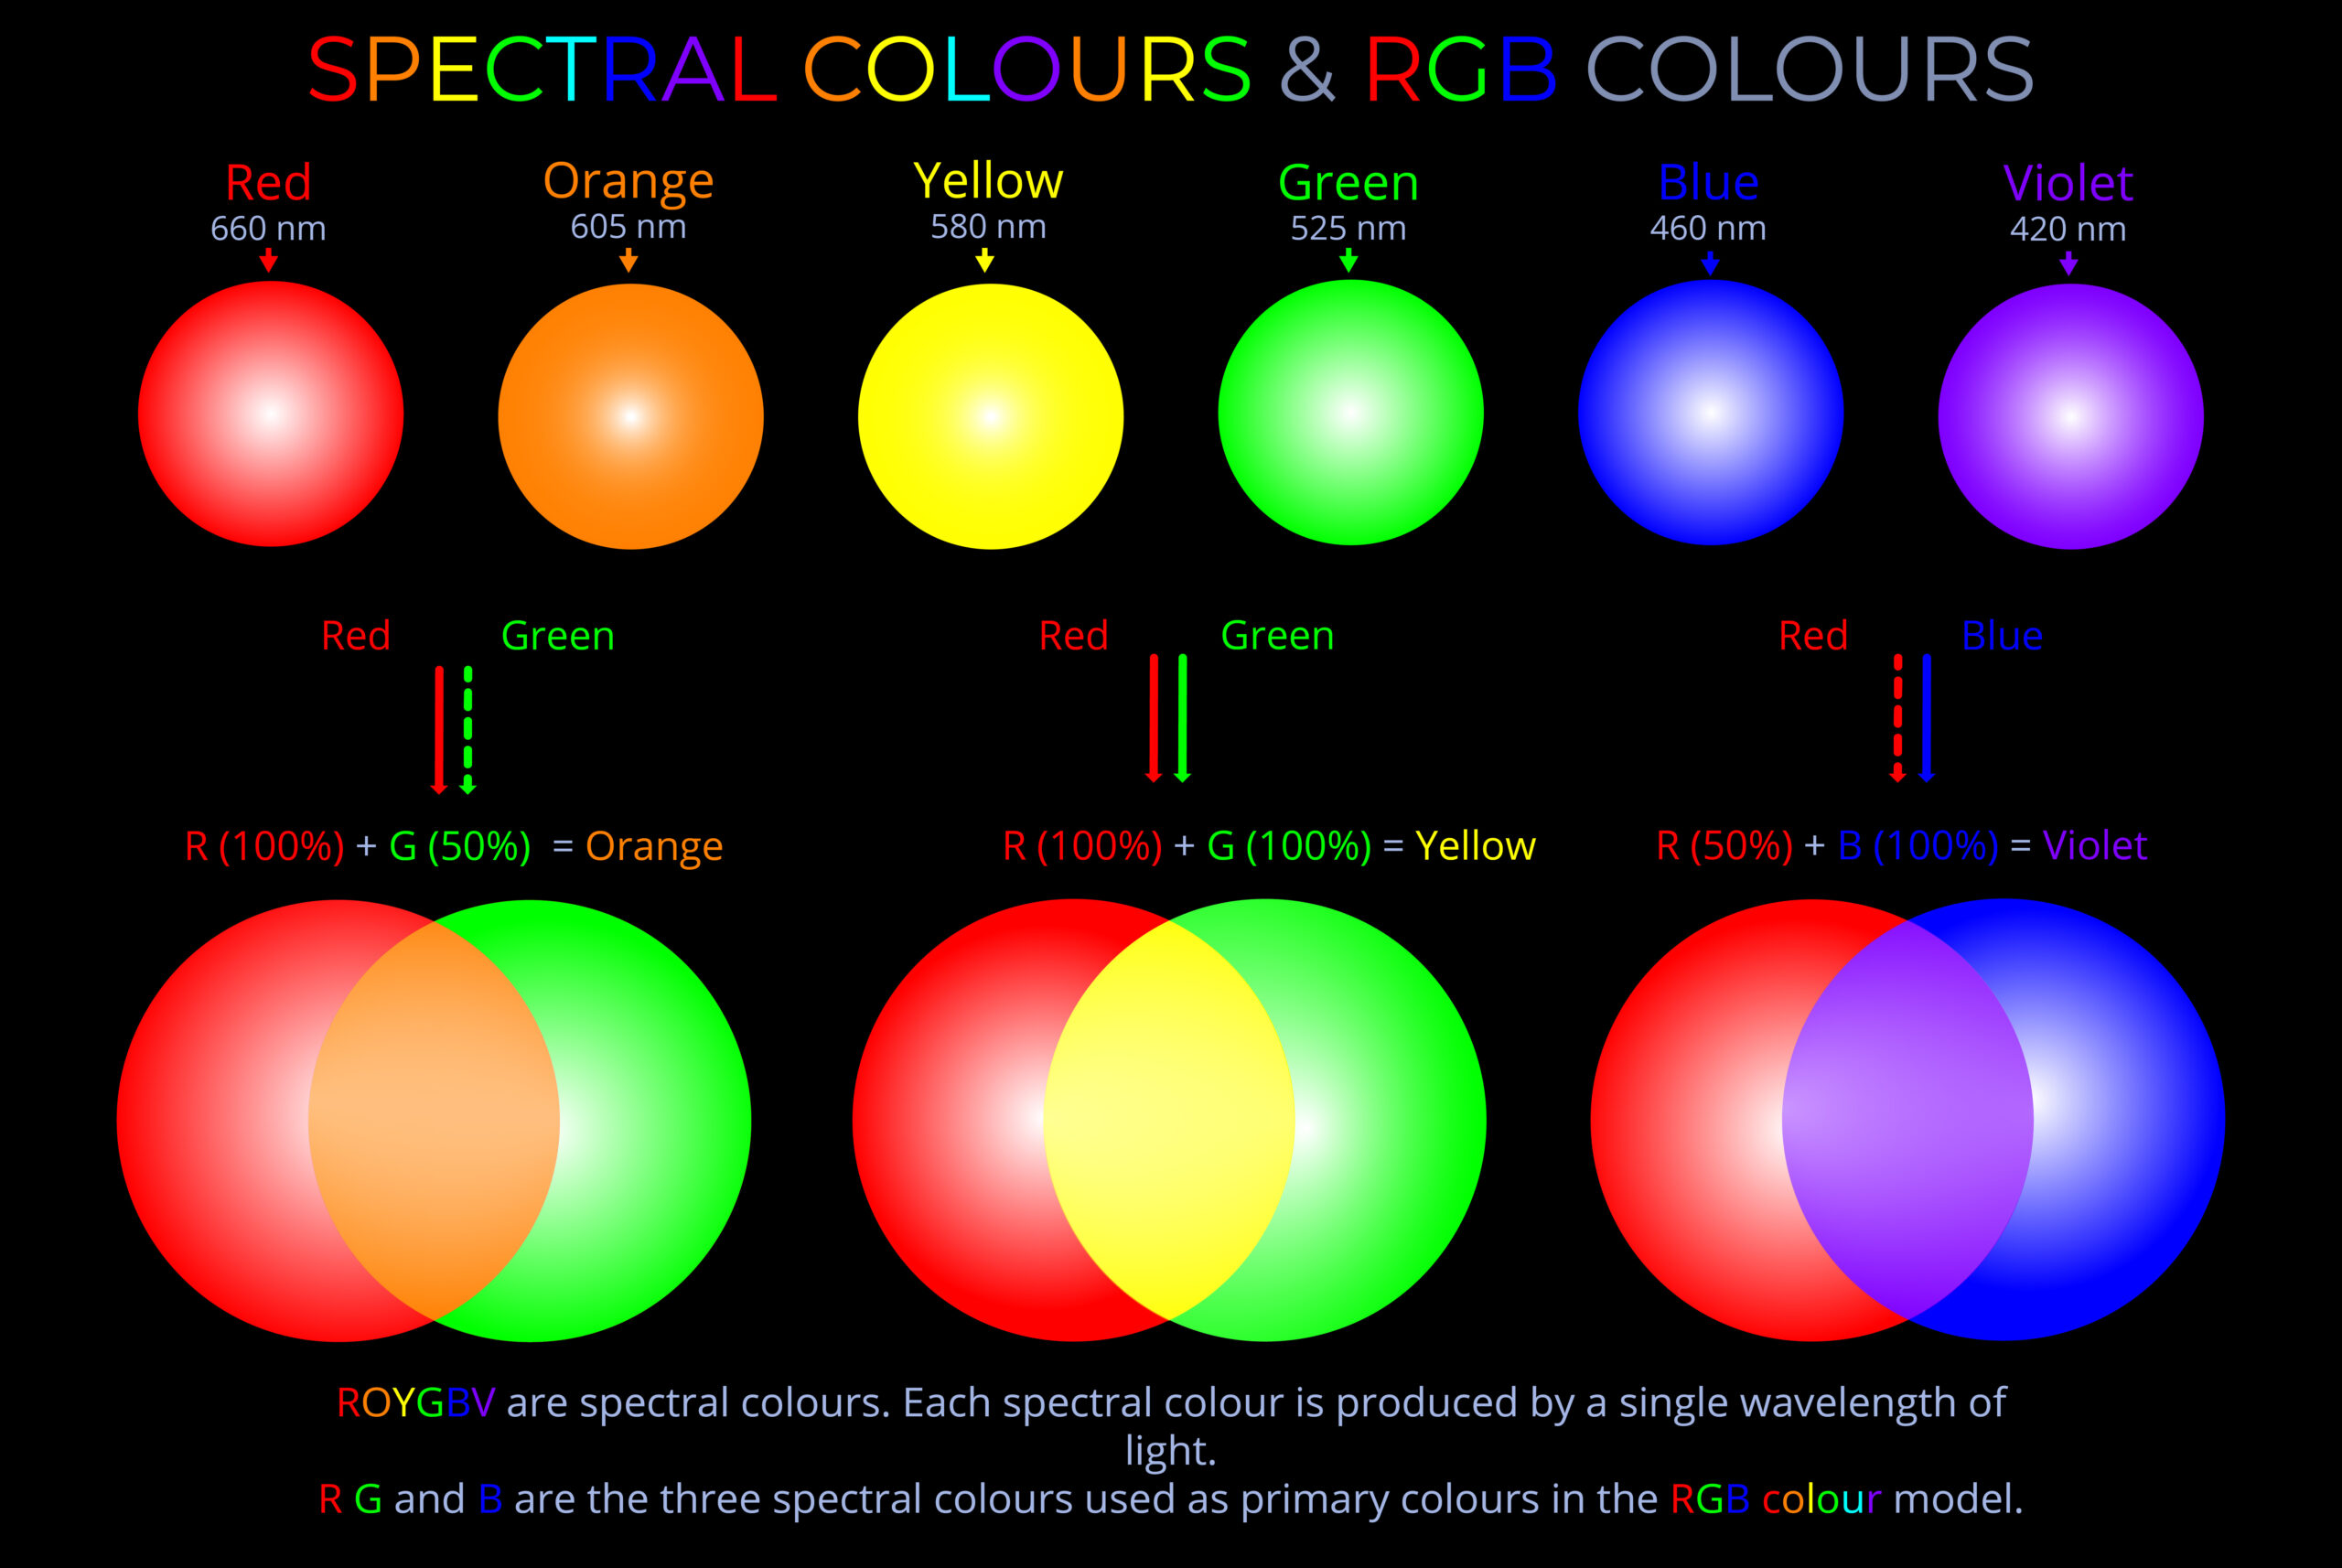 https://lightcolourvision.org/wp-content/uploads/03300-0-A-BL-EN-Spectral-Colours-RGB-Colours-80-scaled.jpg